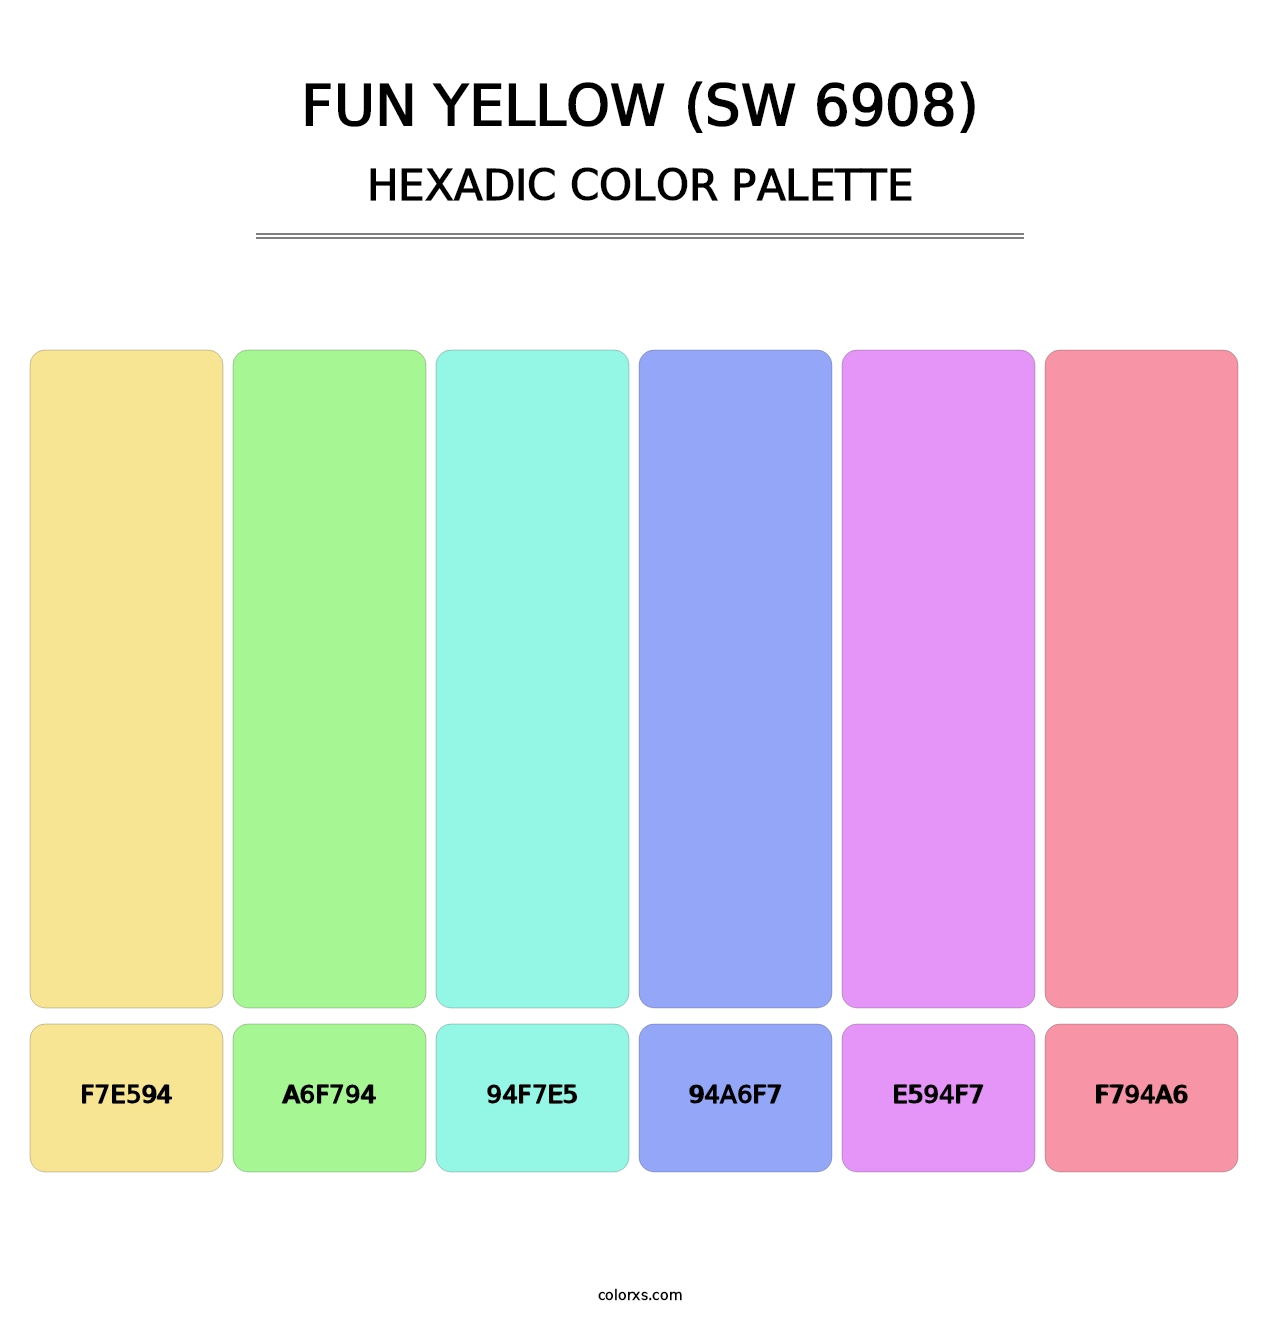 Fun Yellow (SW 6908) - Hexadic Color Palette